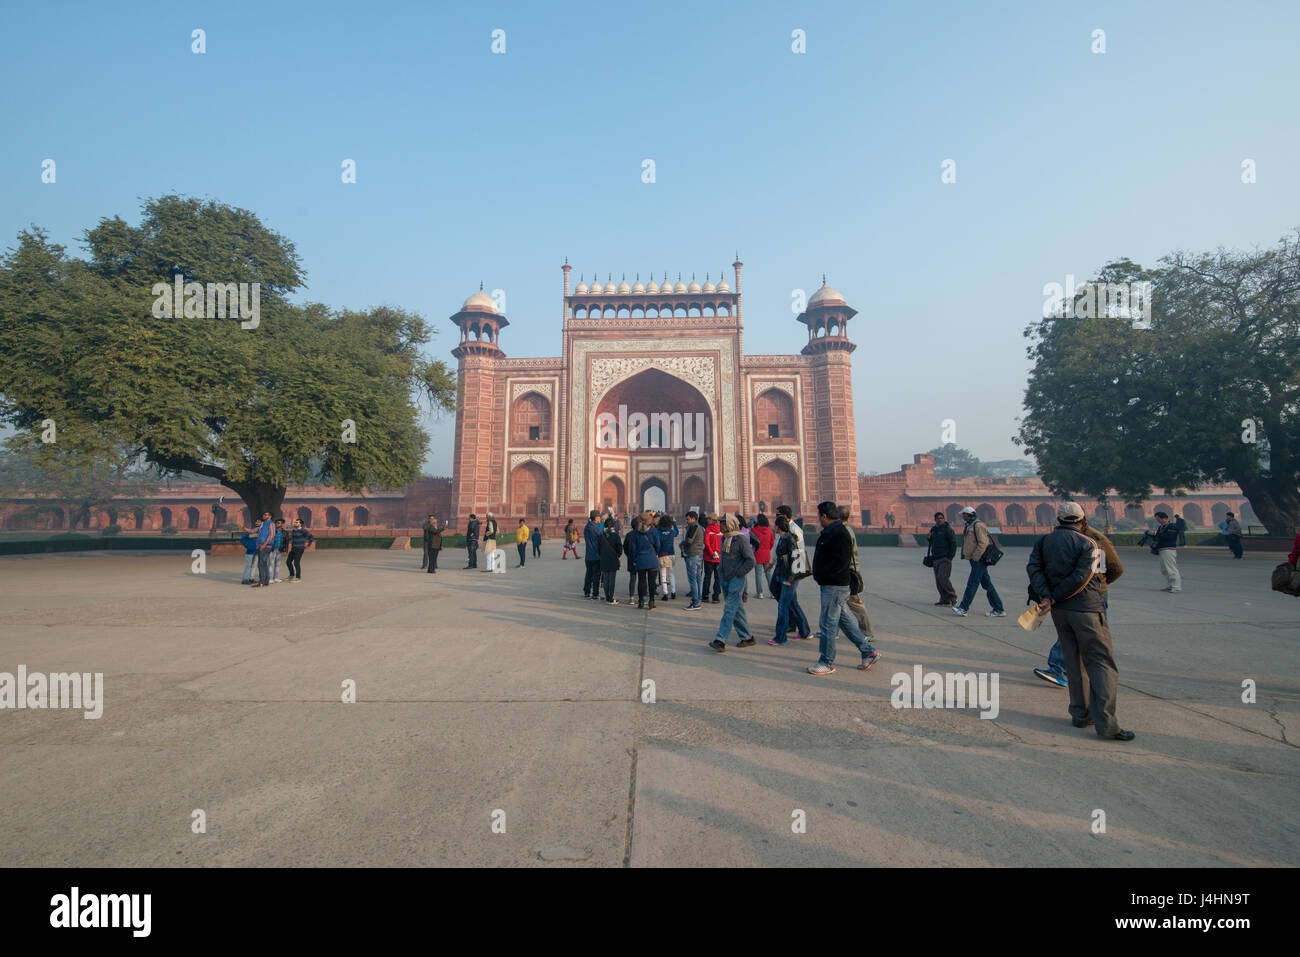 Tourists walking around the Taj Mahal complex entrance in Agra, India. Stock Photo